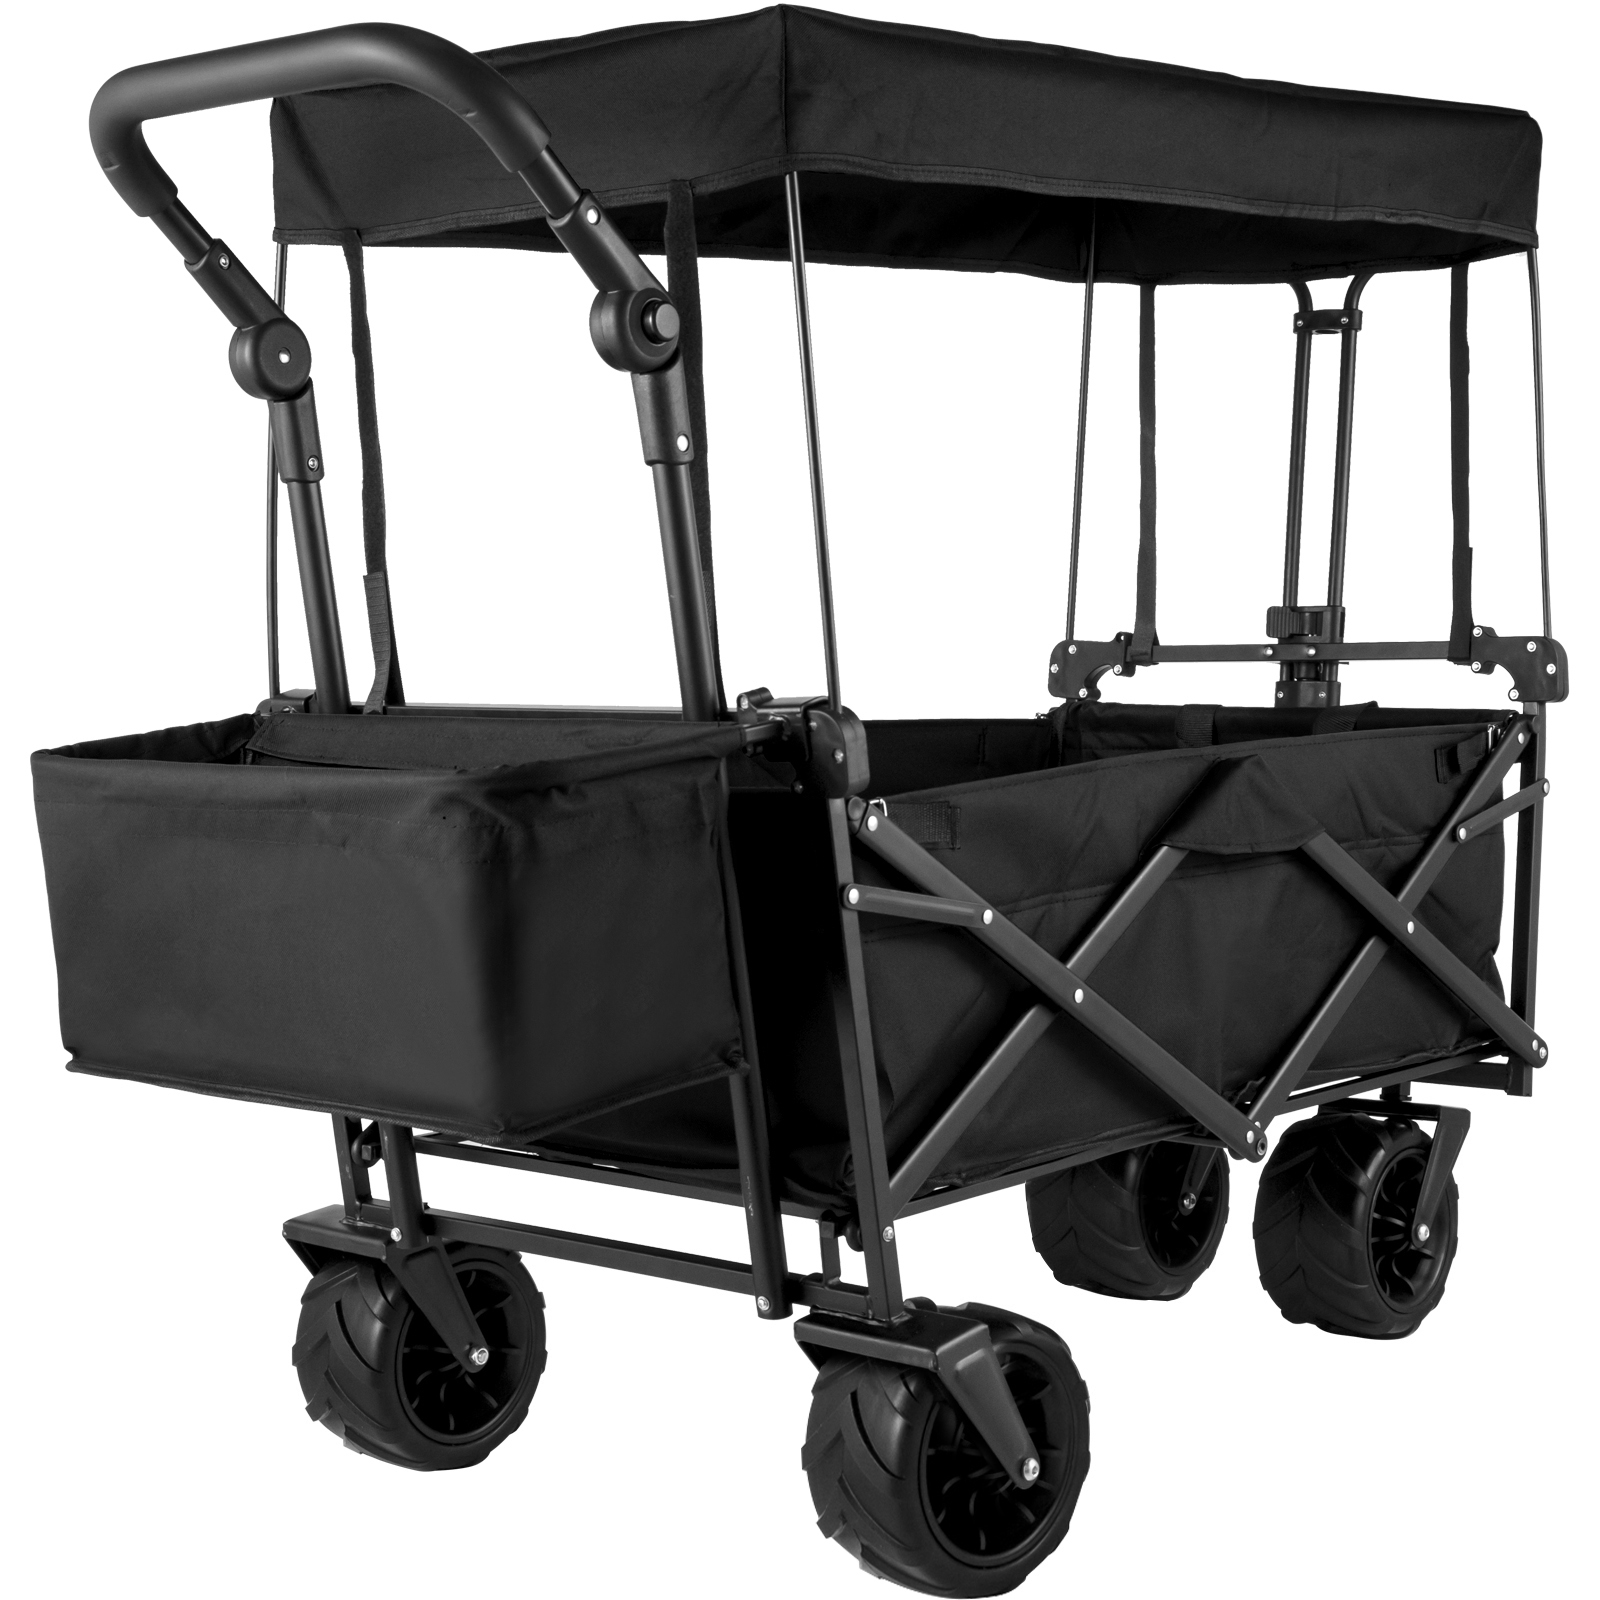 Details about   Garden Cart Collapsible Beach Cart Folding Wagon Utility Shopping Cart Outdoor 